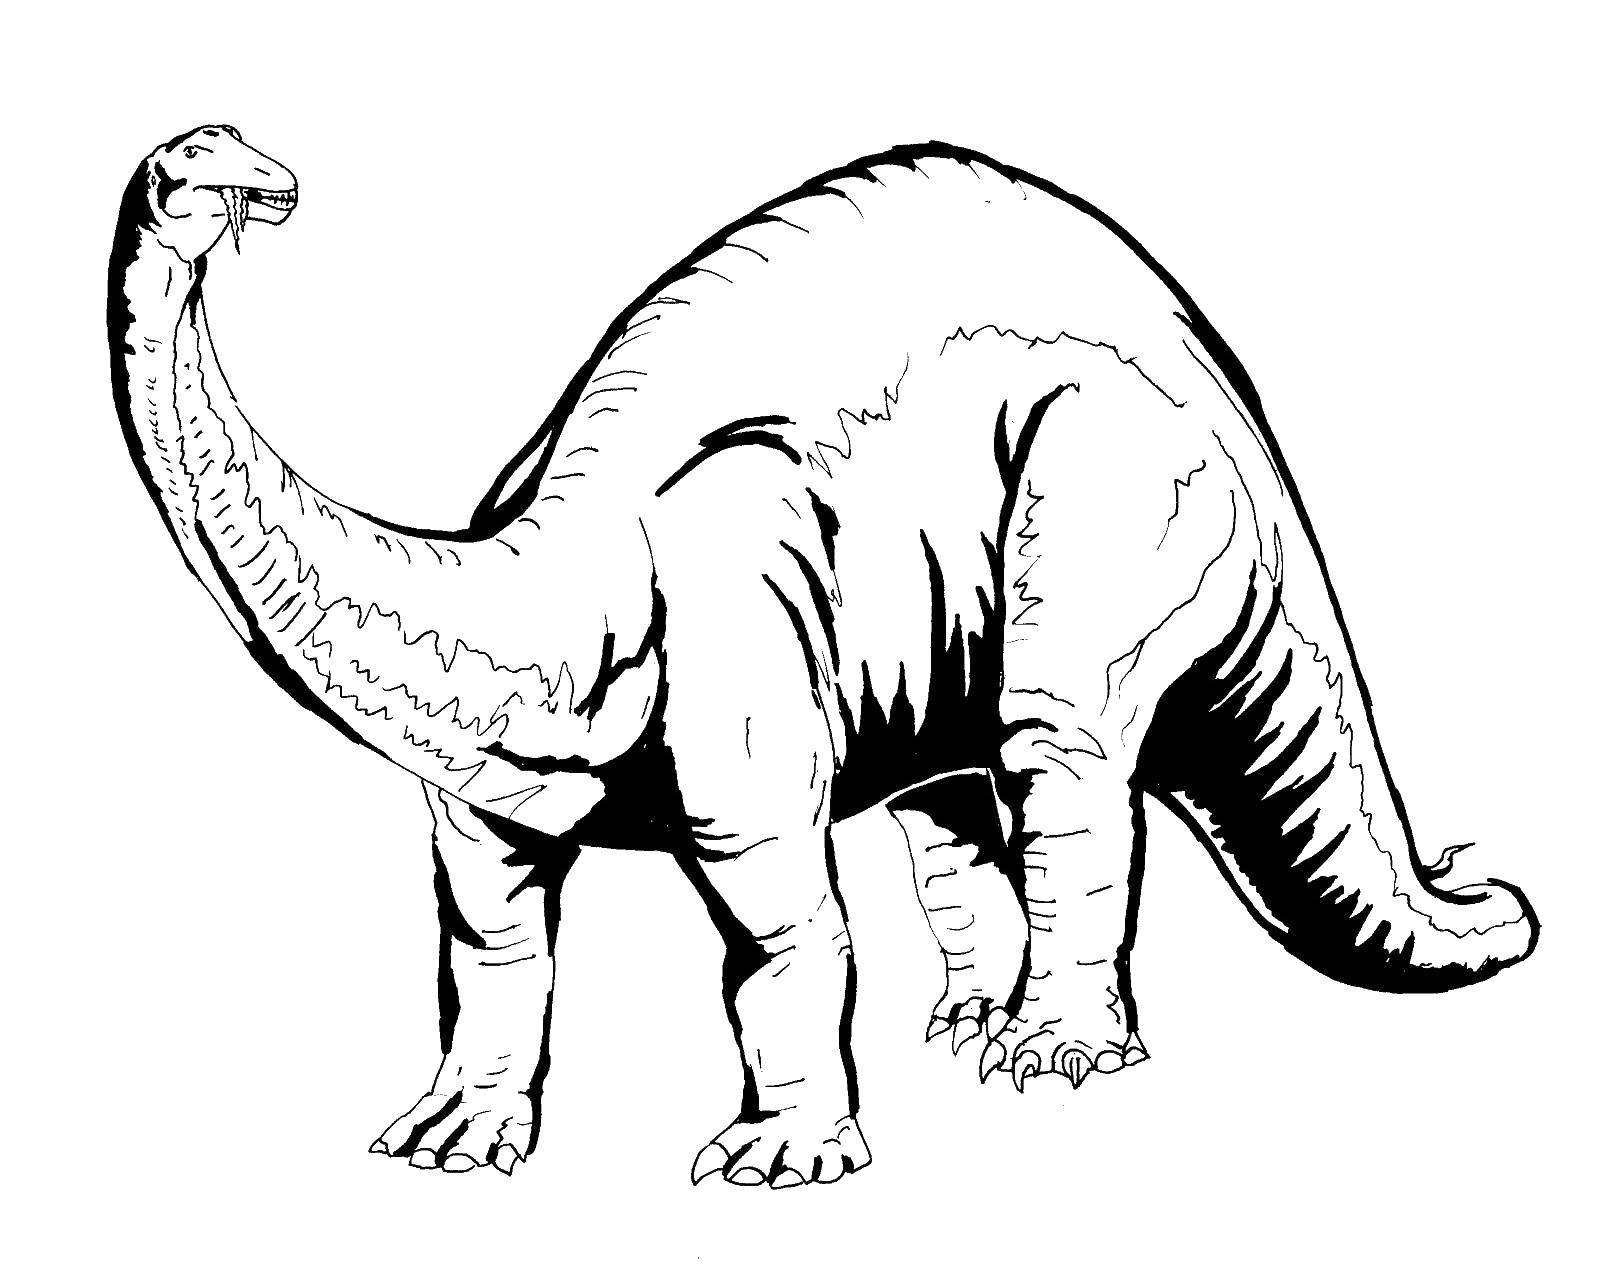 Coloring Apatosaurus. Category dinosaur. Tags:  the Apatosaurus.